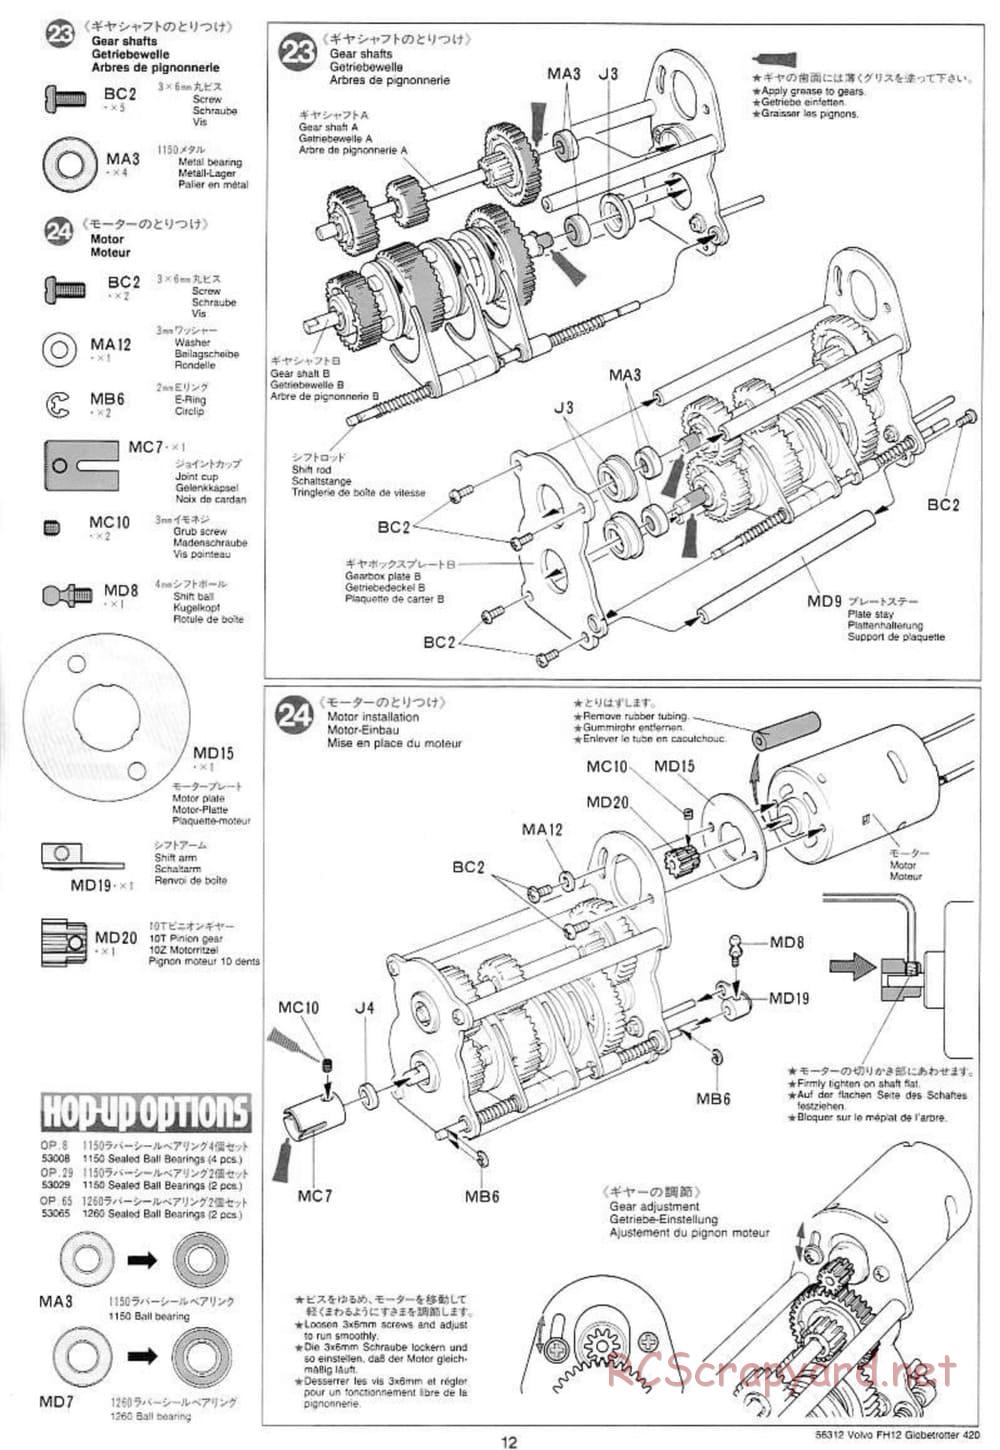 Tamiya - Volvo FH12 Globetrotter 420 - Manual - Page 12